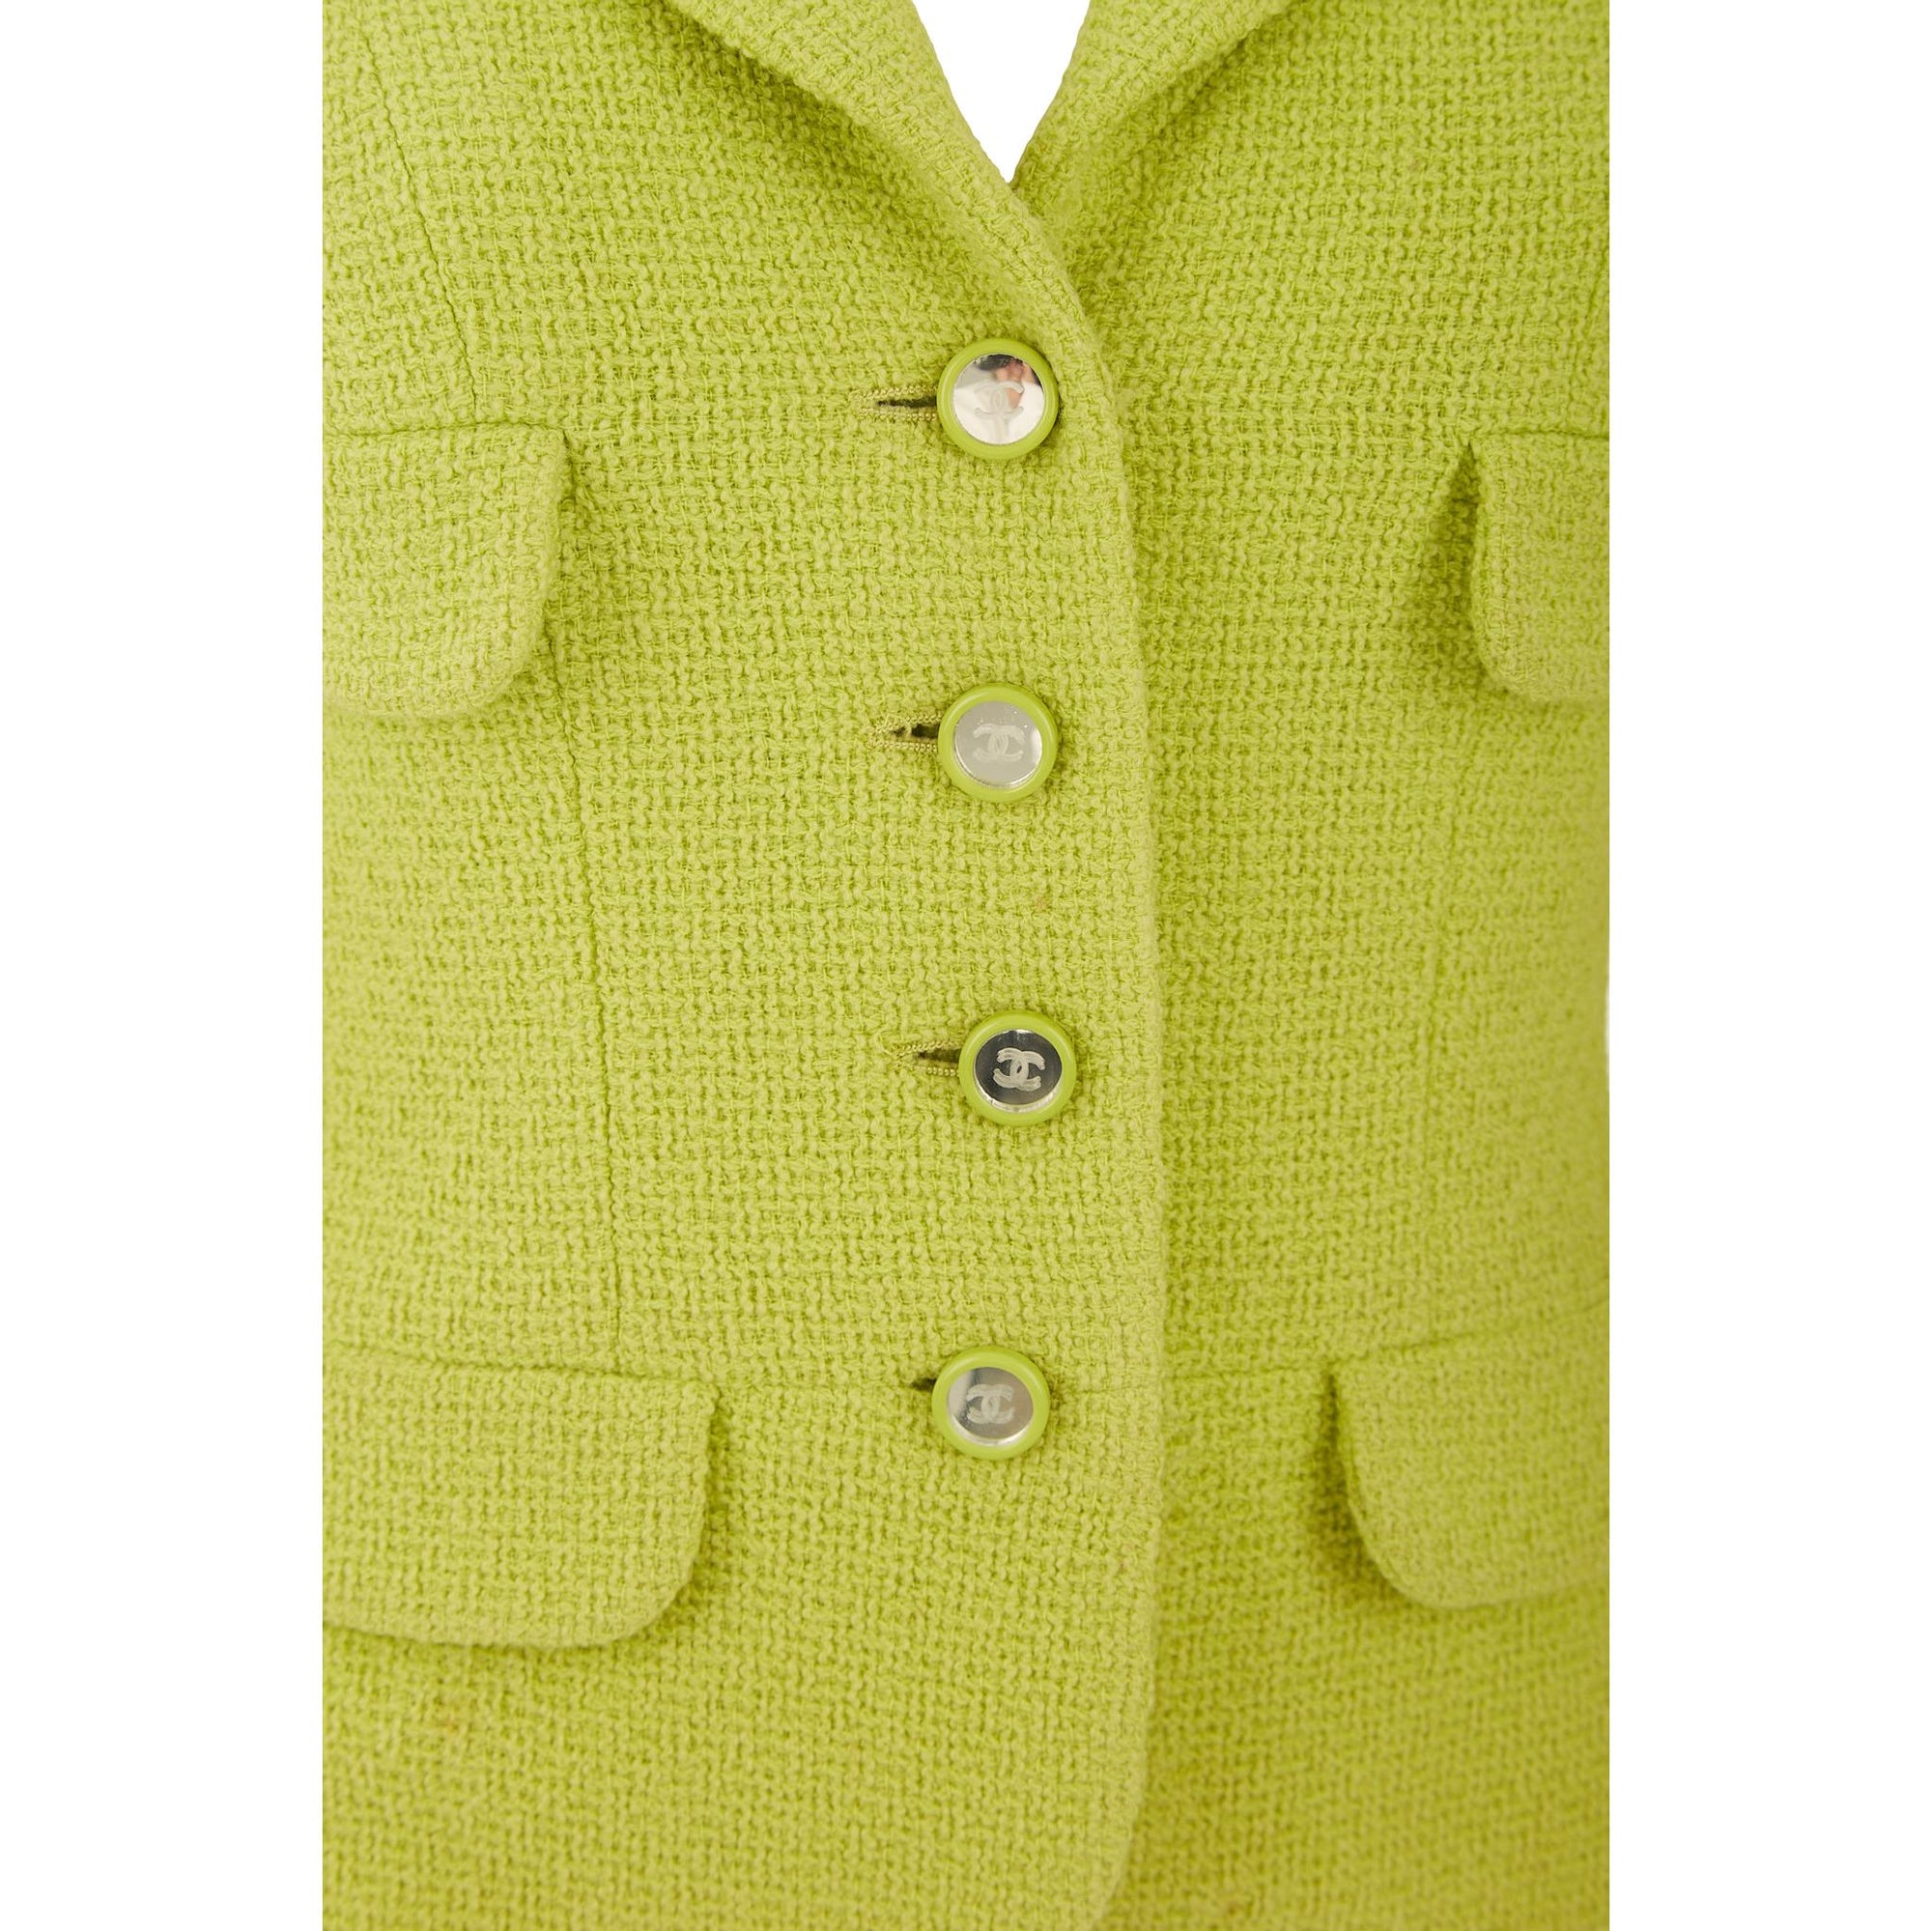 Chanel Lime Green Tweed Jacket